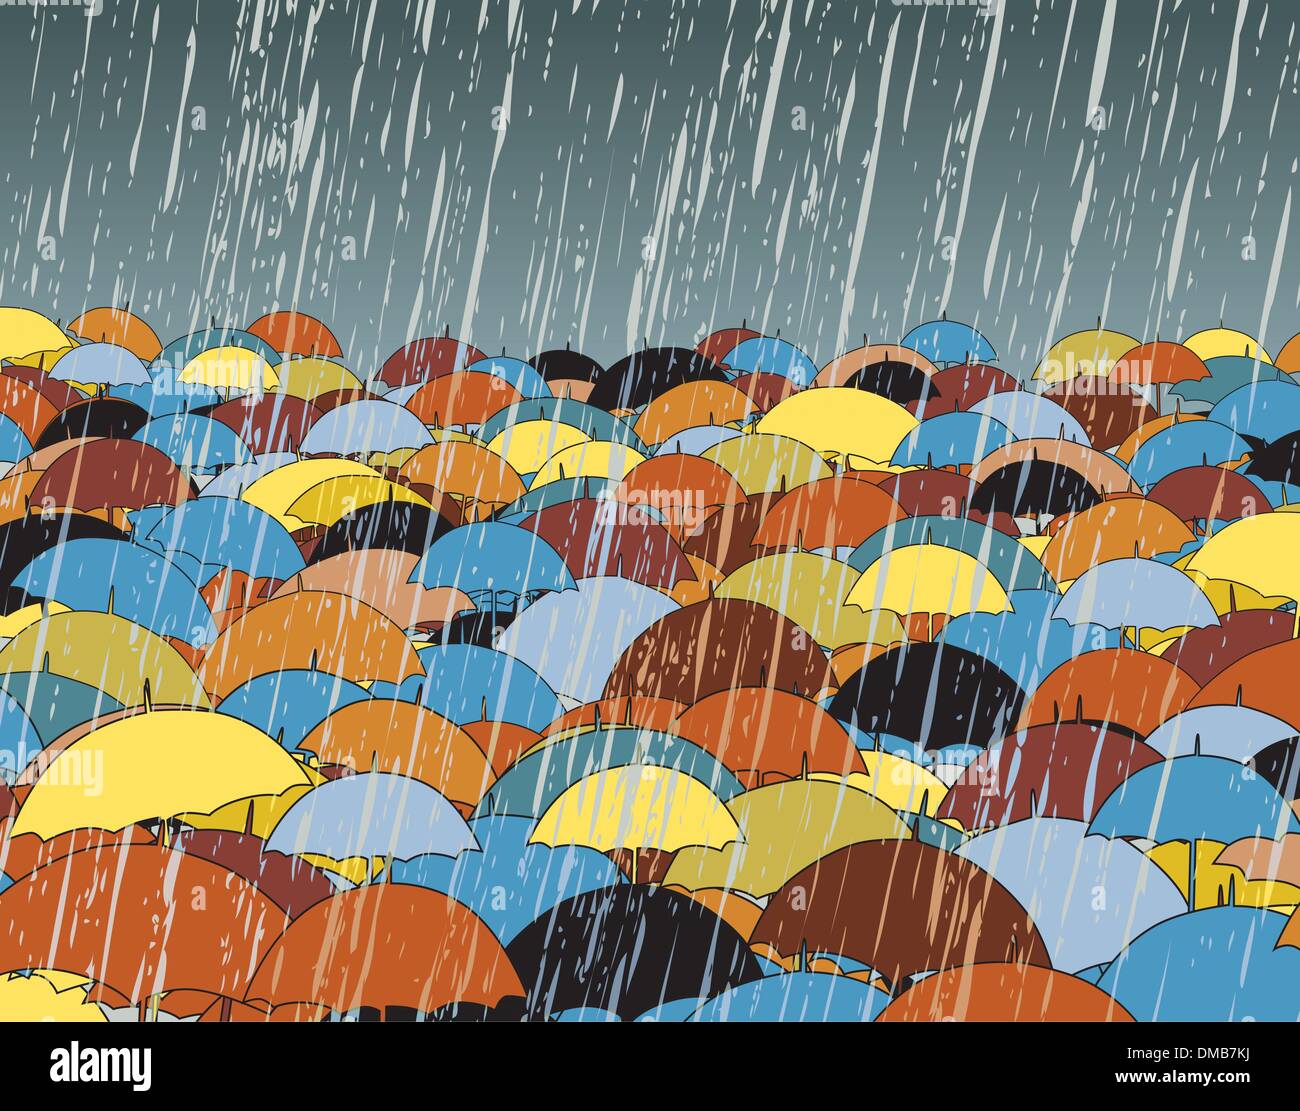 Lluvia de paraguas Imágenes vectoriales de stock - Alamy